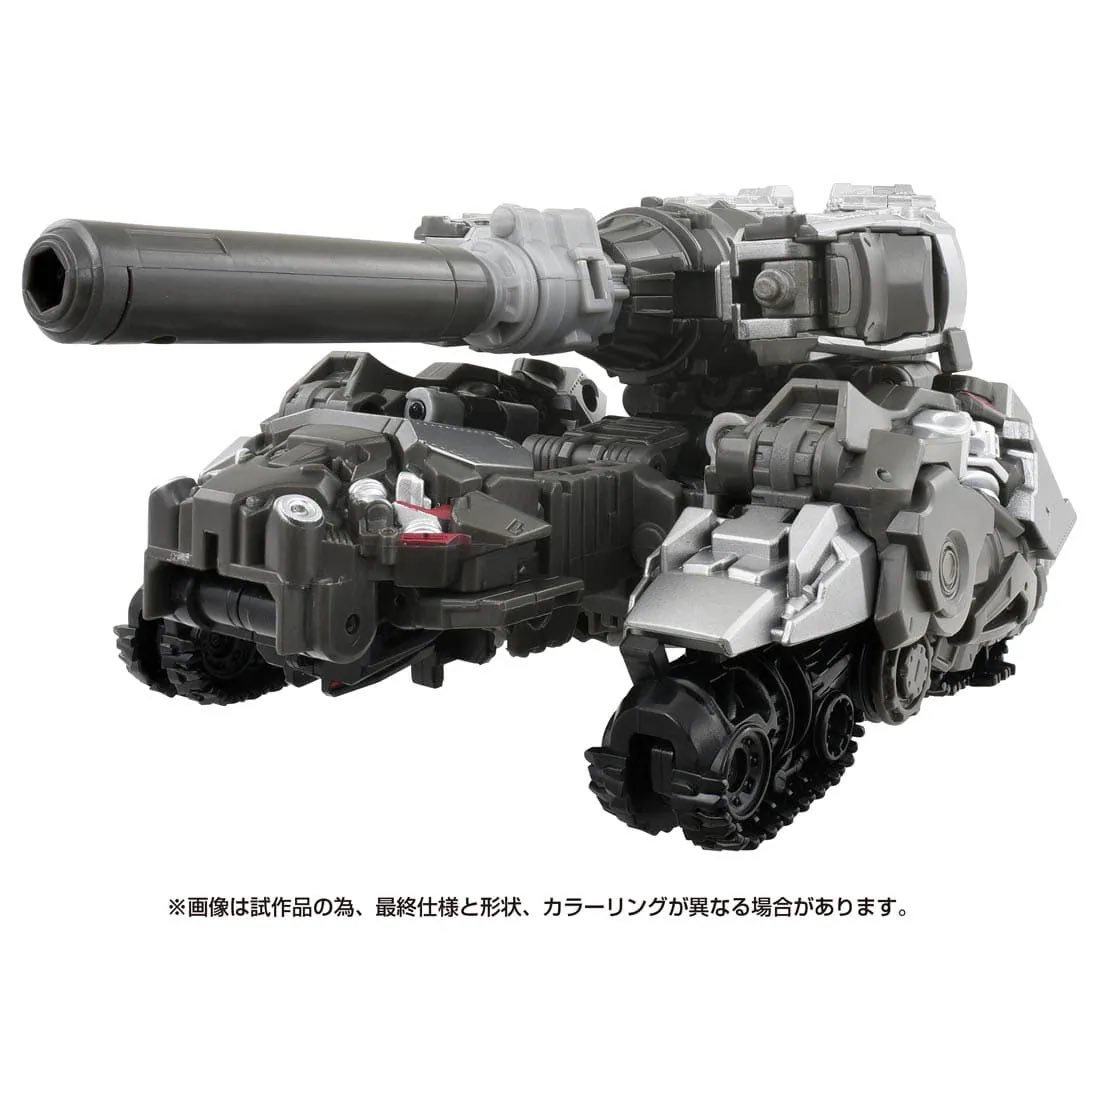 motor vehicle ground vehicle no humans military vehicle vehicle focus military tank  illustration images